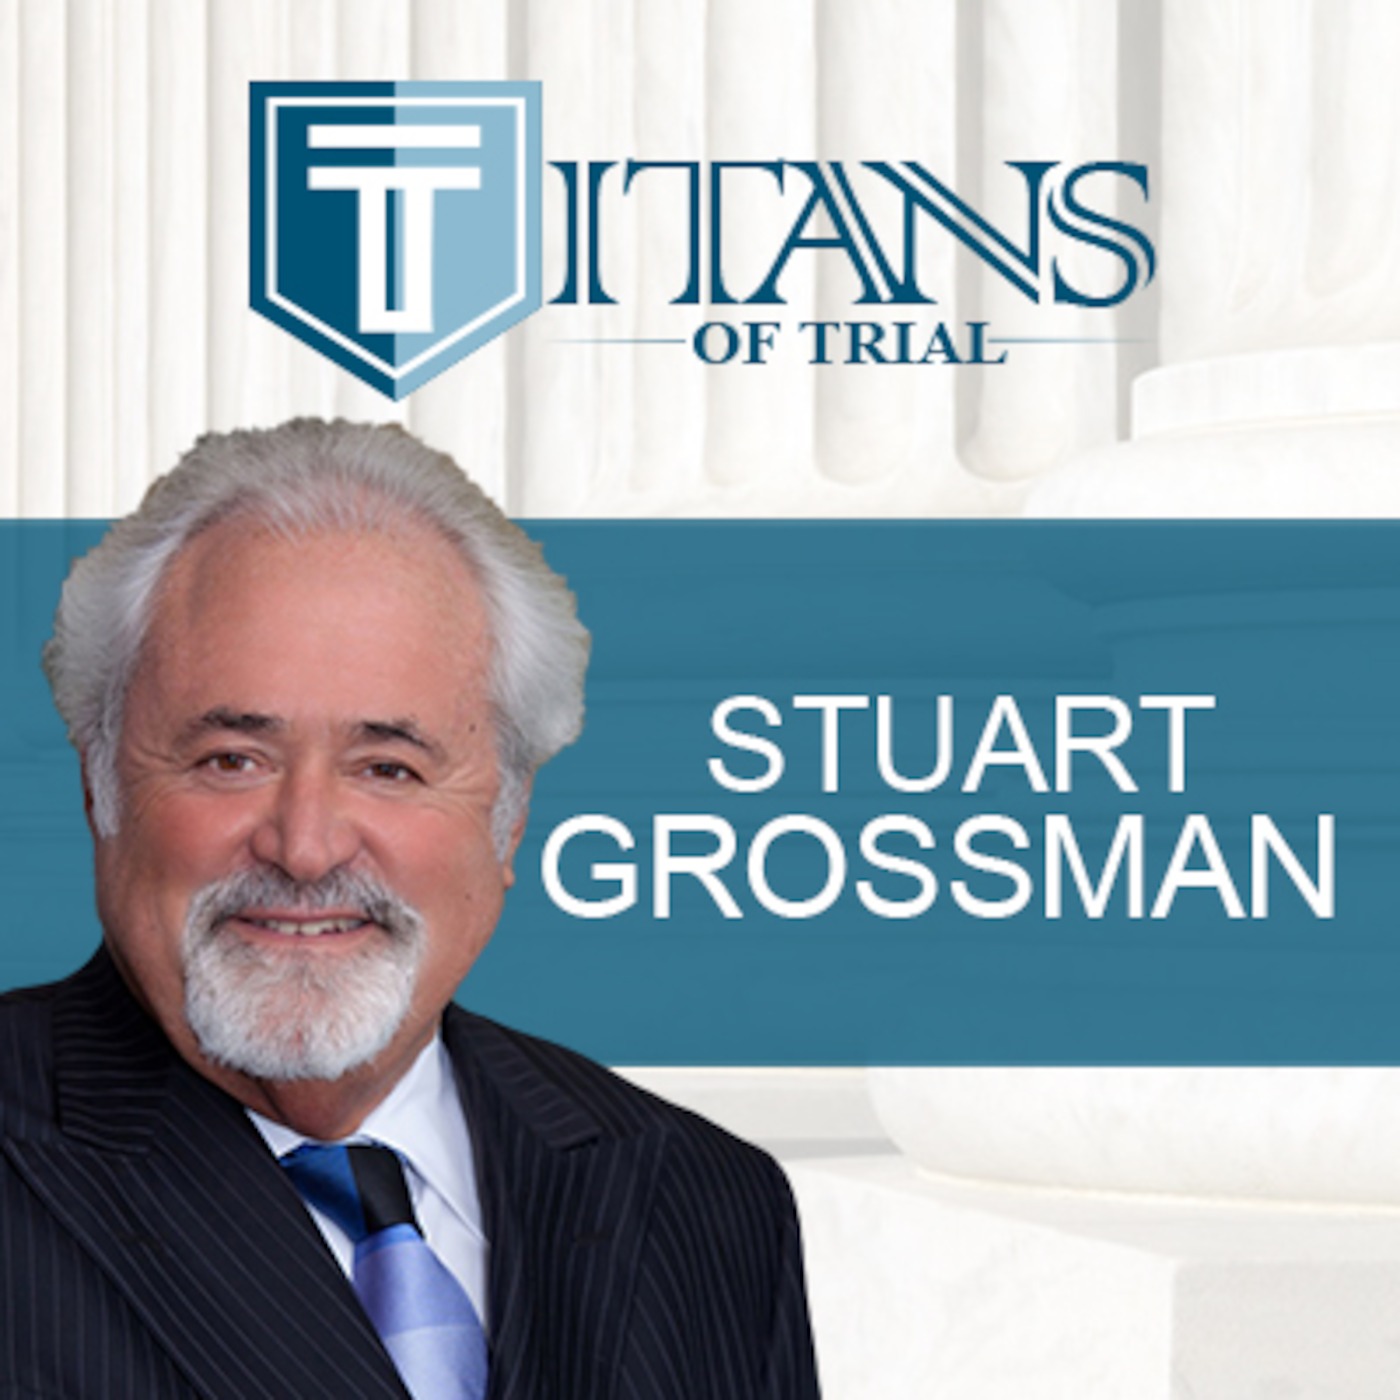 Titans of Trial - Stuart Grossman